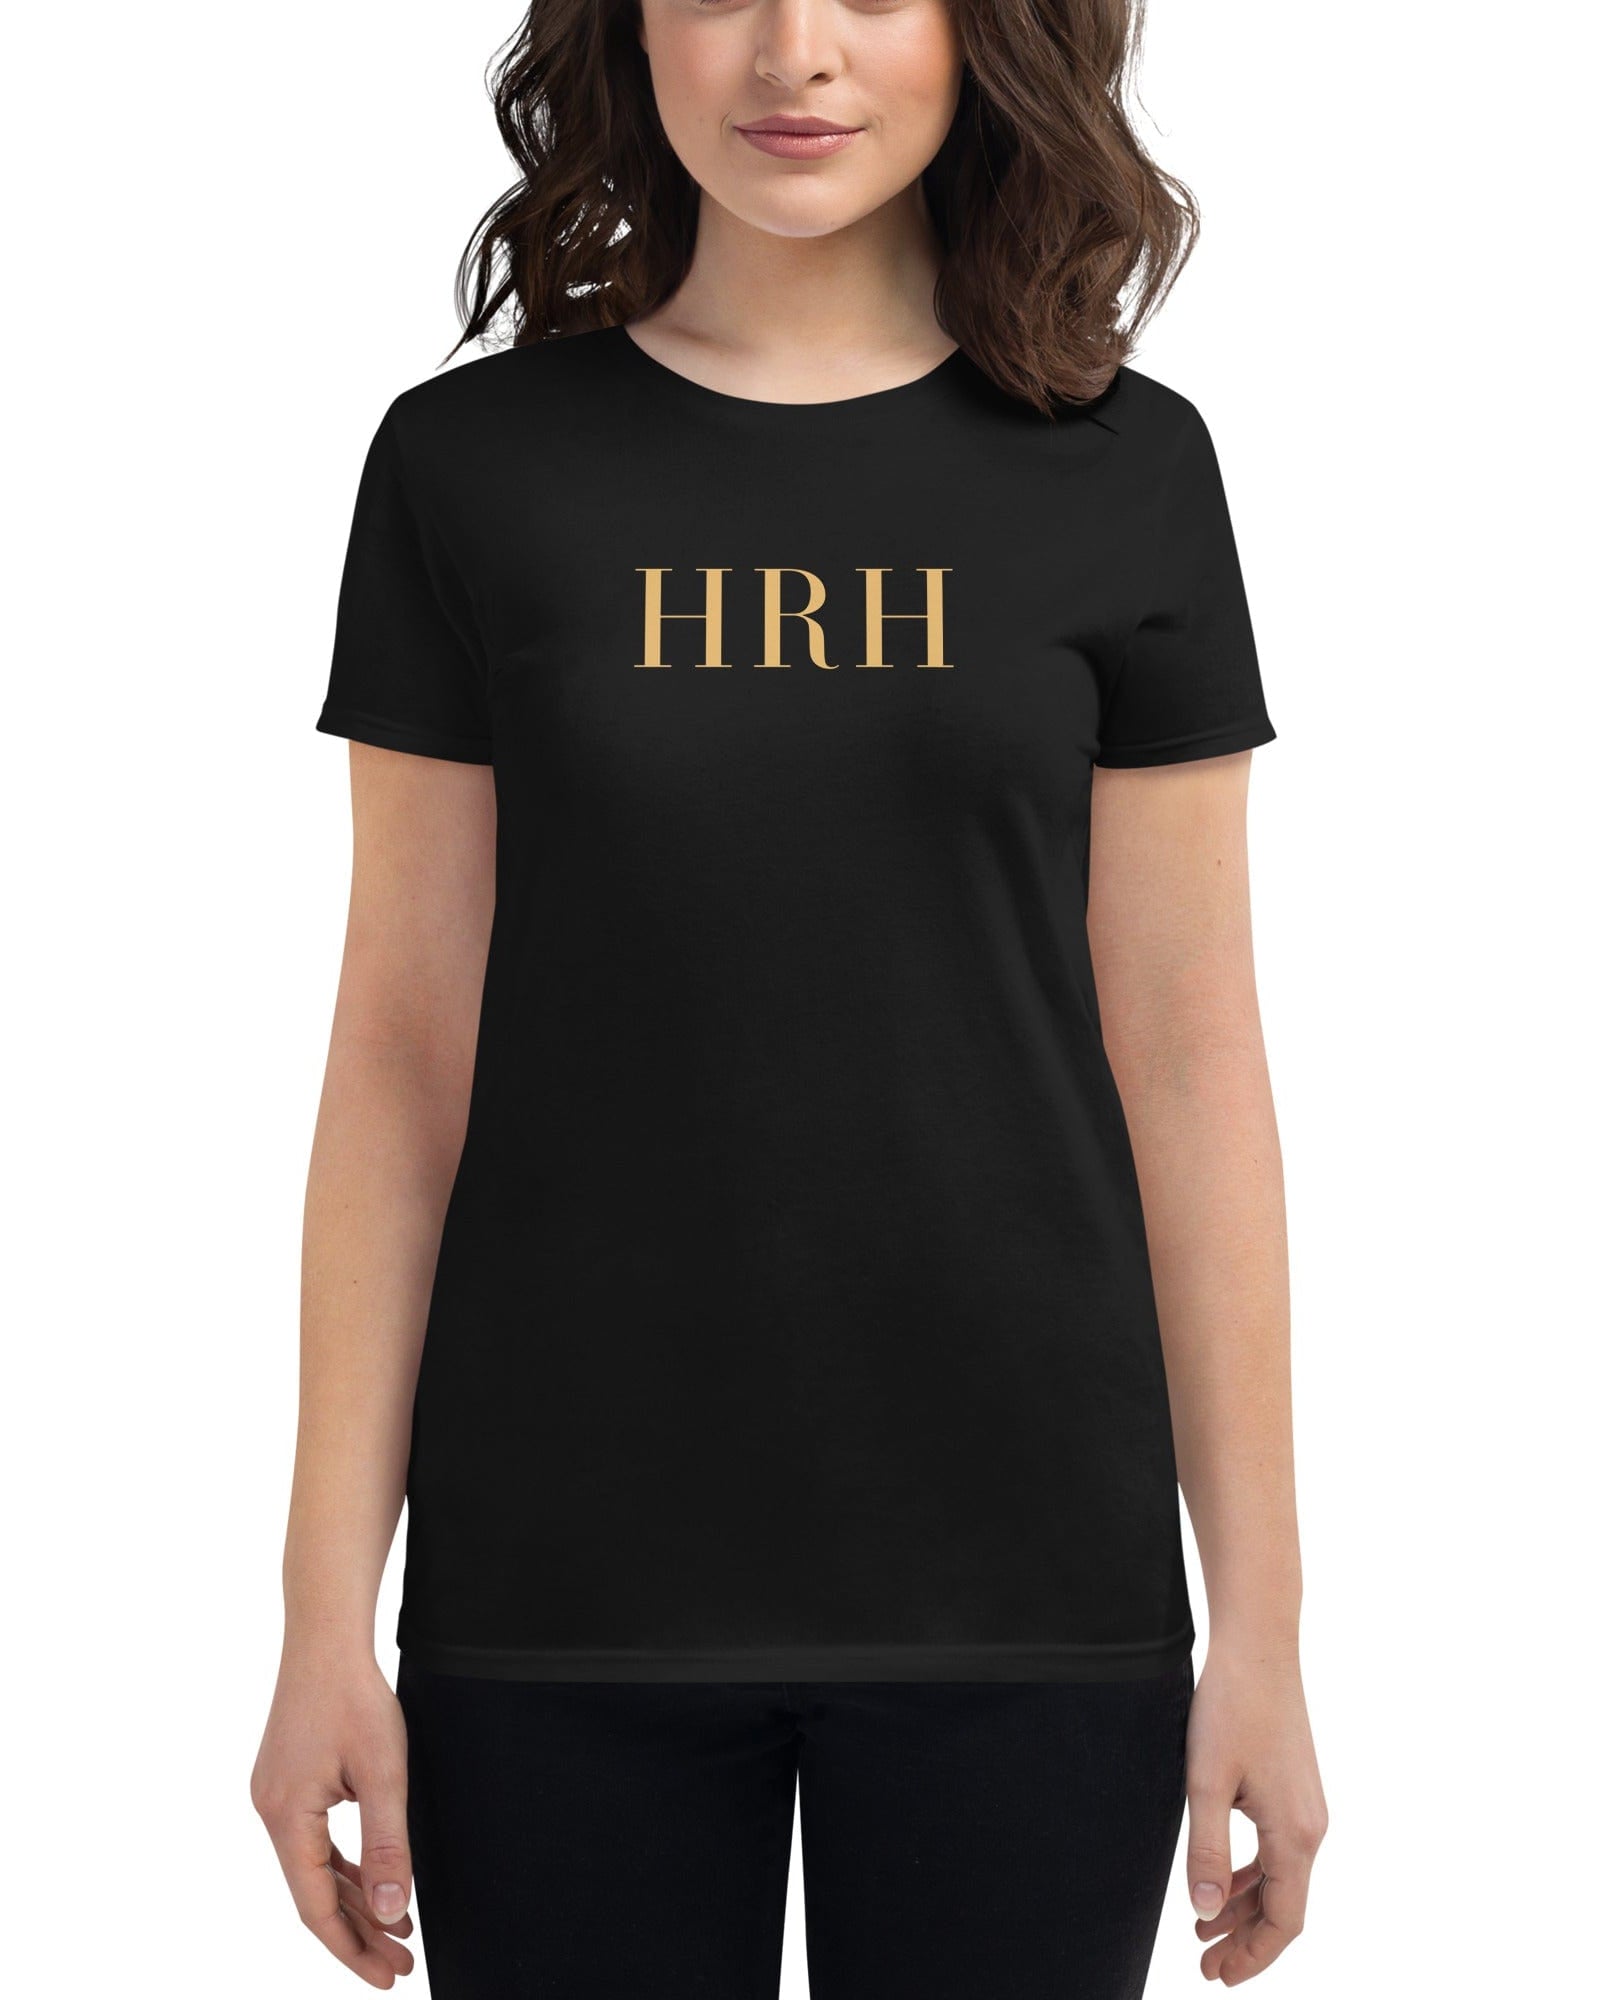 HRH Women's T-shirt for Her Royal Highness Black / S Shirts & Tops Jolly & Goode